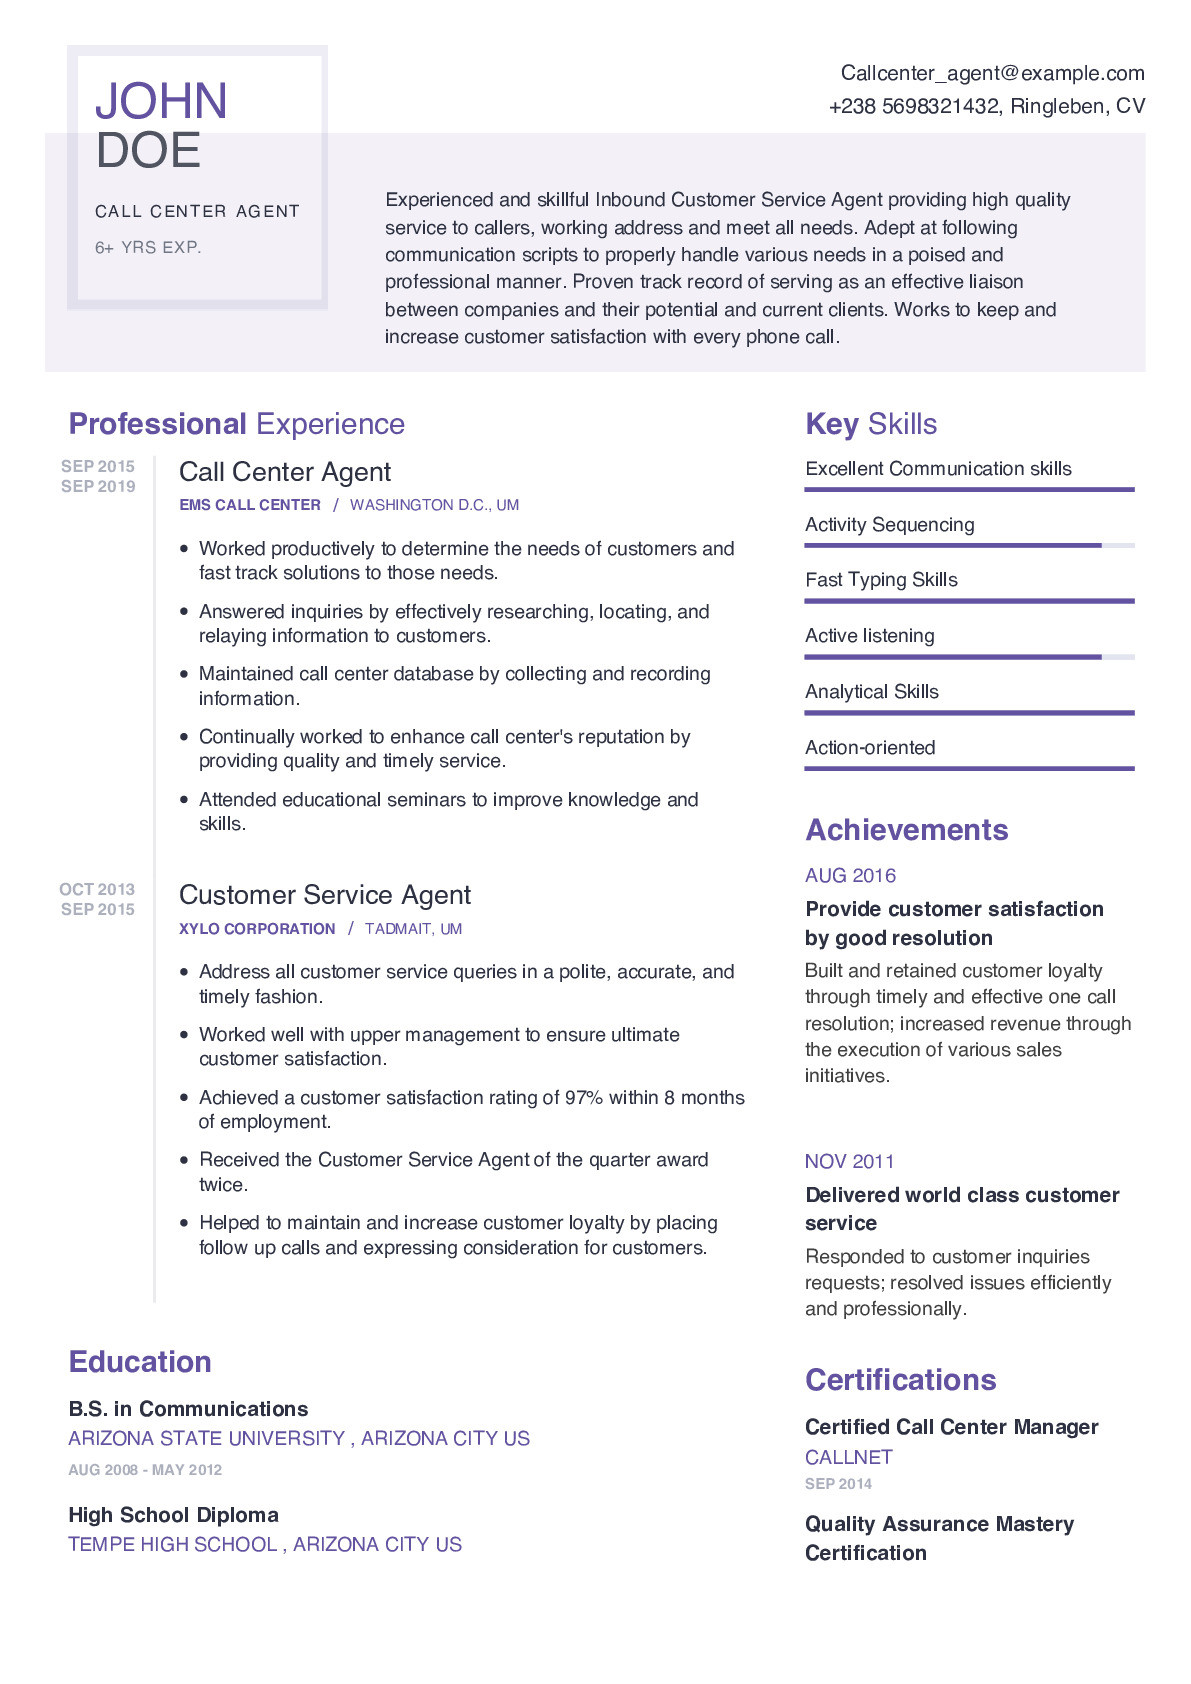 Sample Resume for Call Center Agent Call Center Agent Resume Example with Content Sample Craftmycv